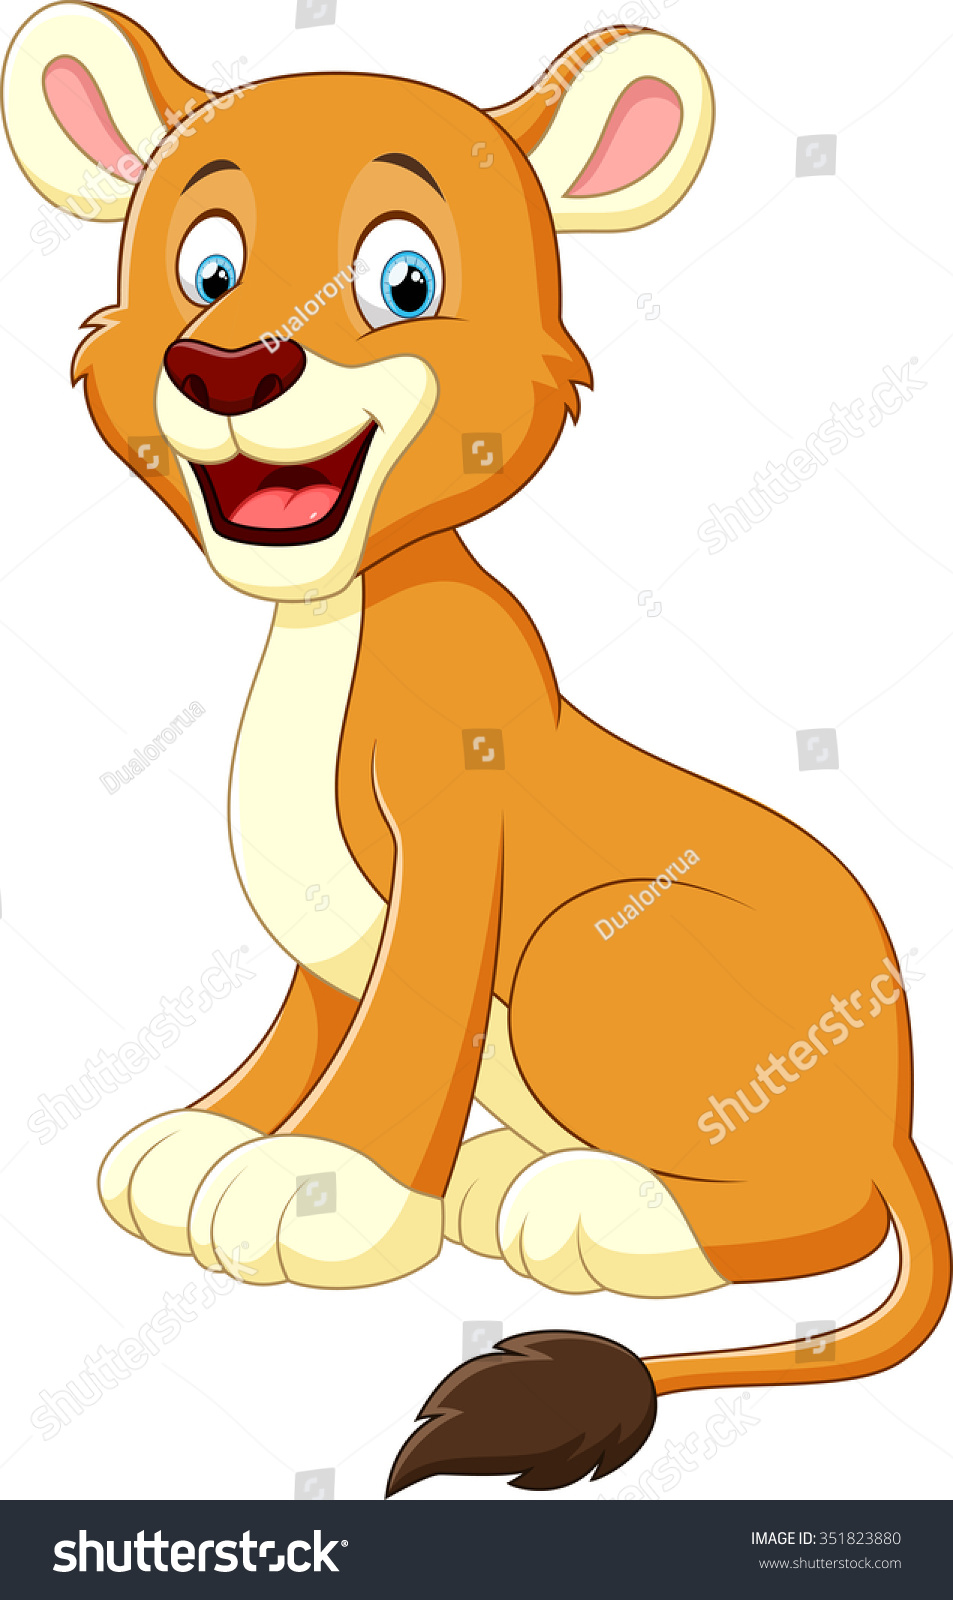 Cute Lion Cartoon Stock Photo 351823880 : Shutterstock